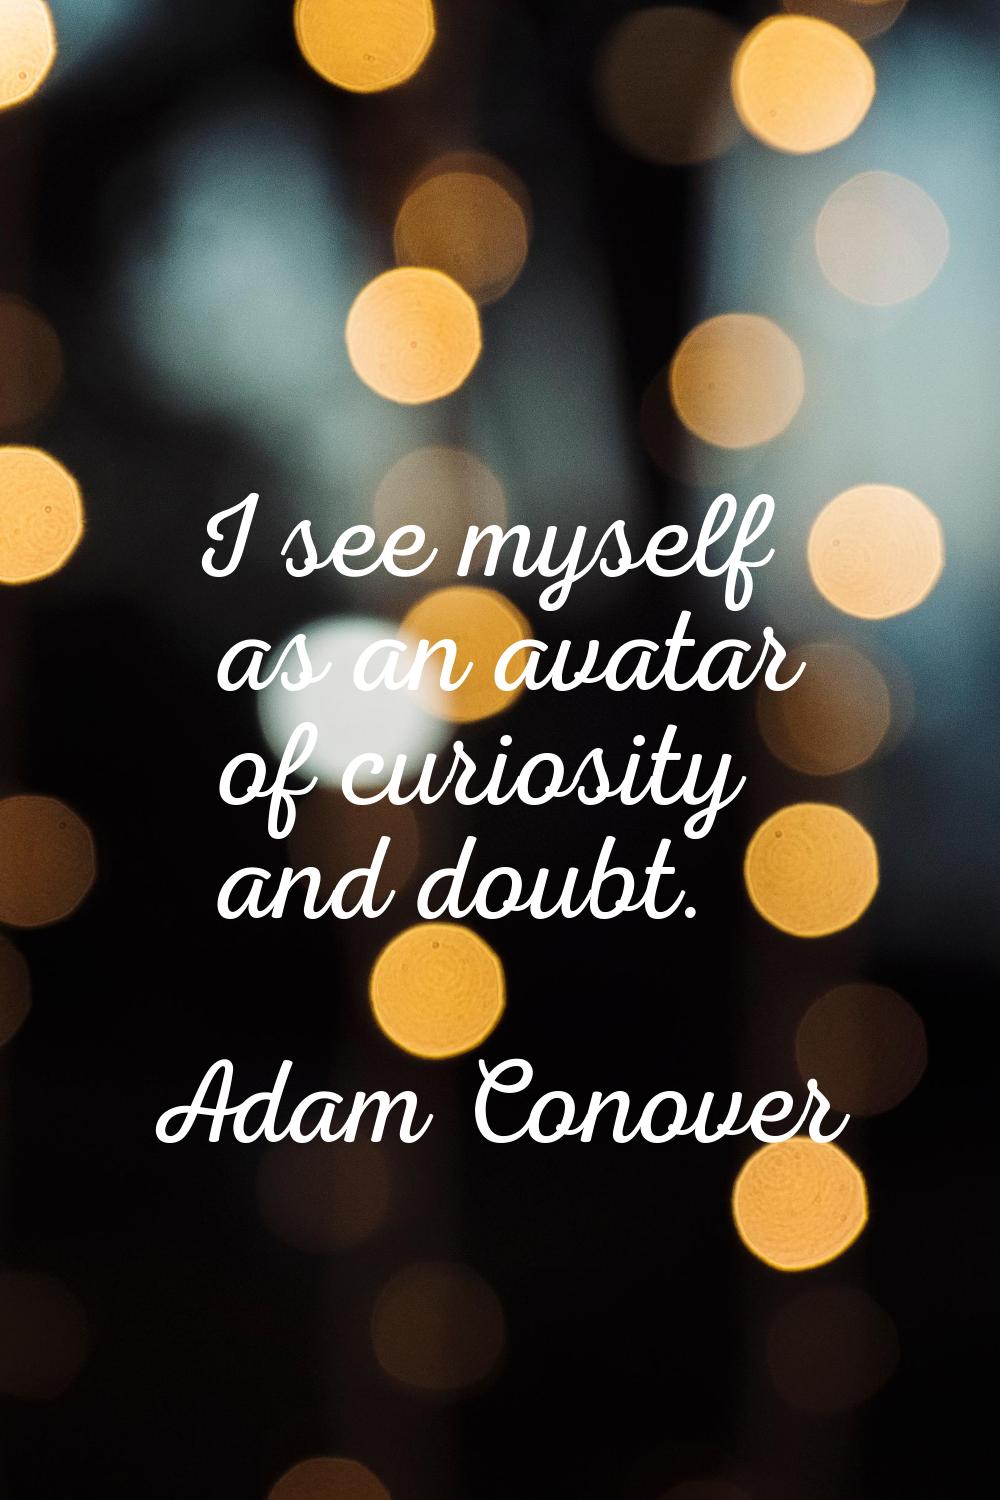 I see myself as an avatar of curiosity and doubt.